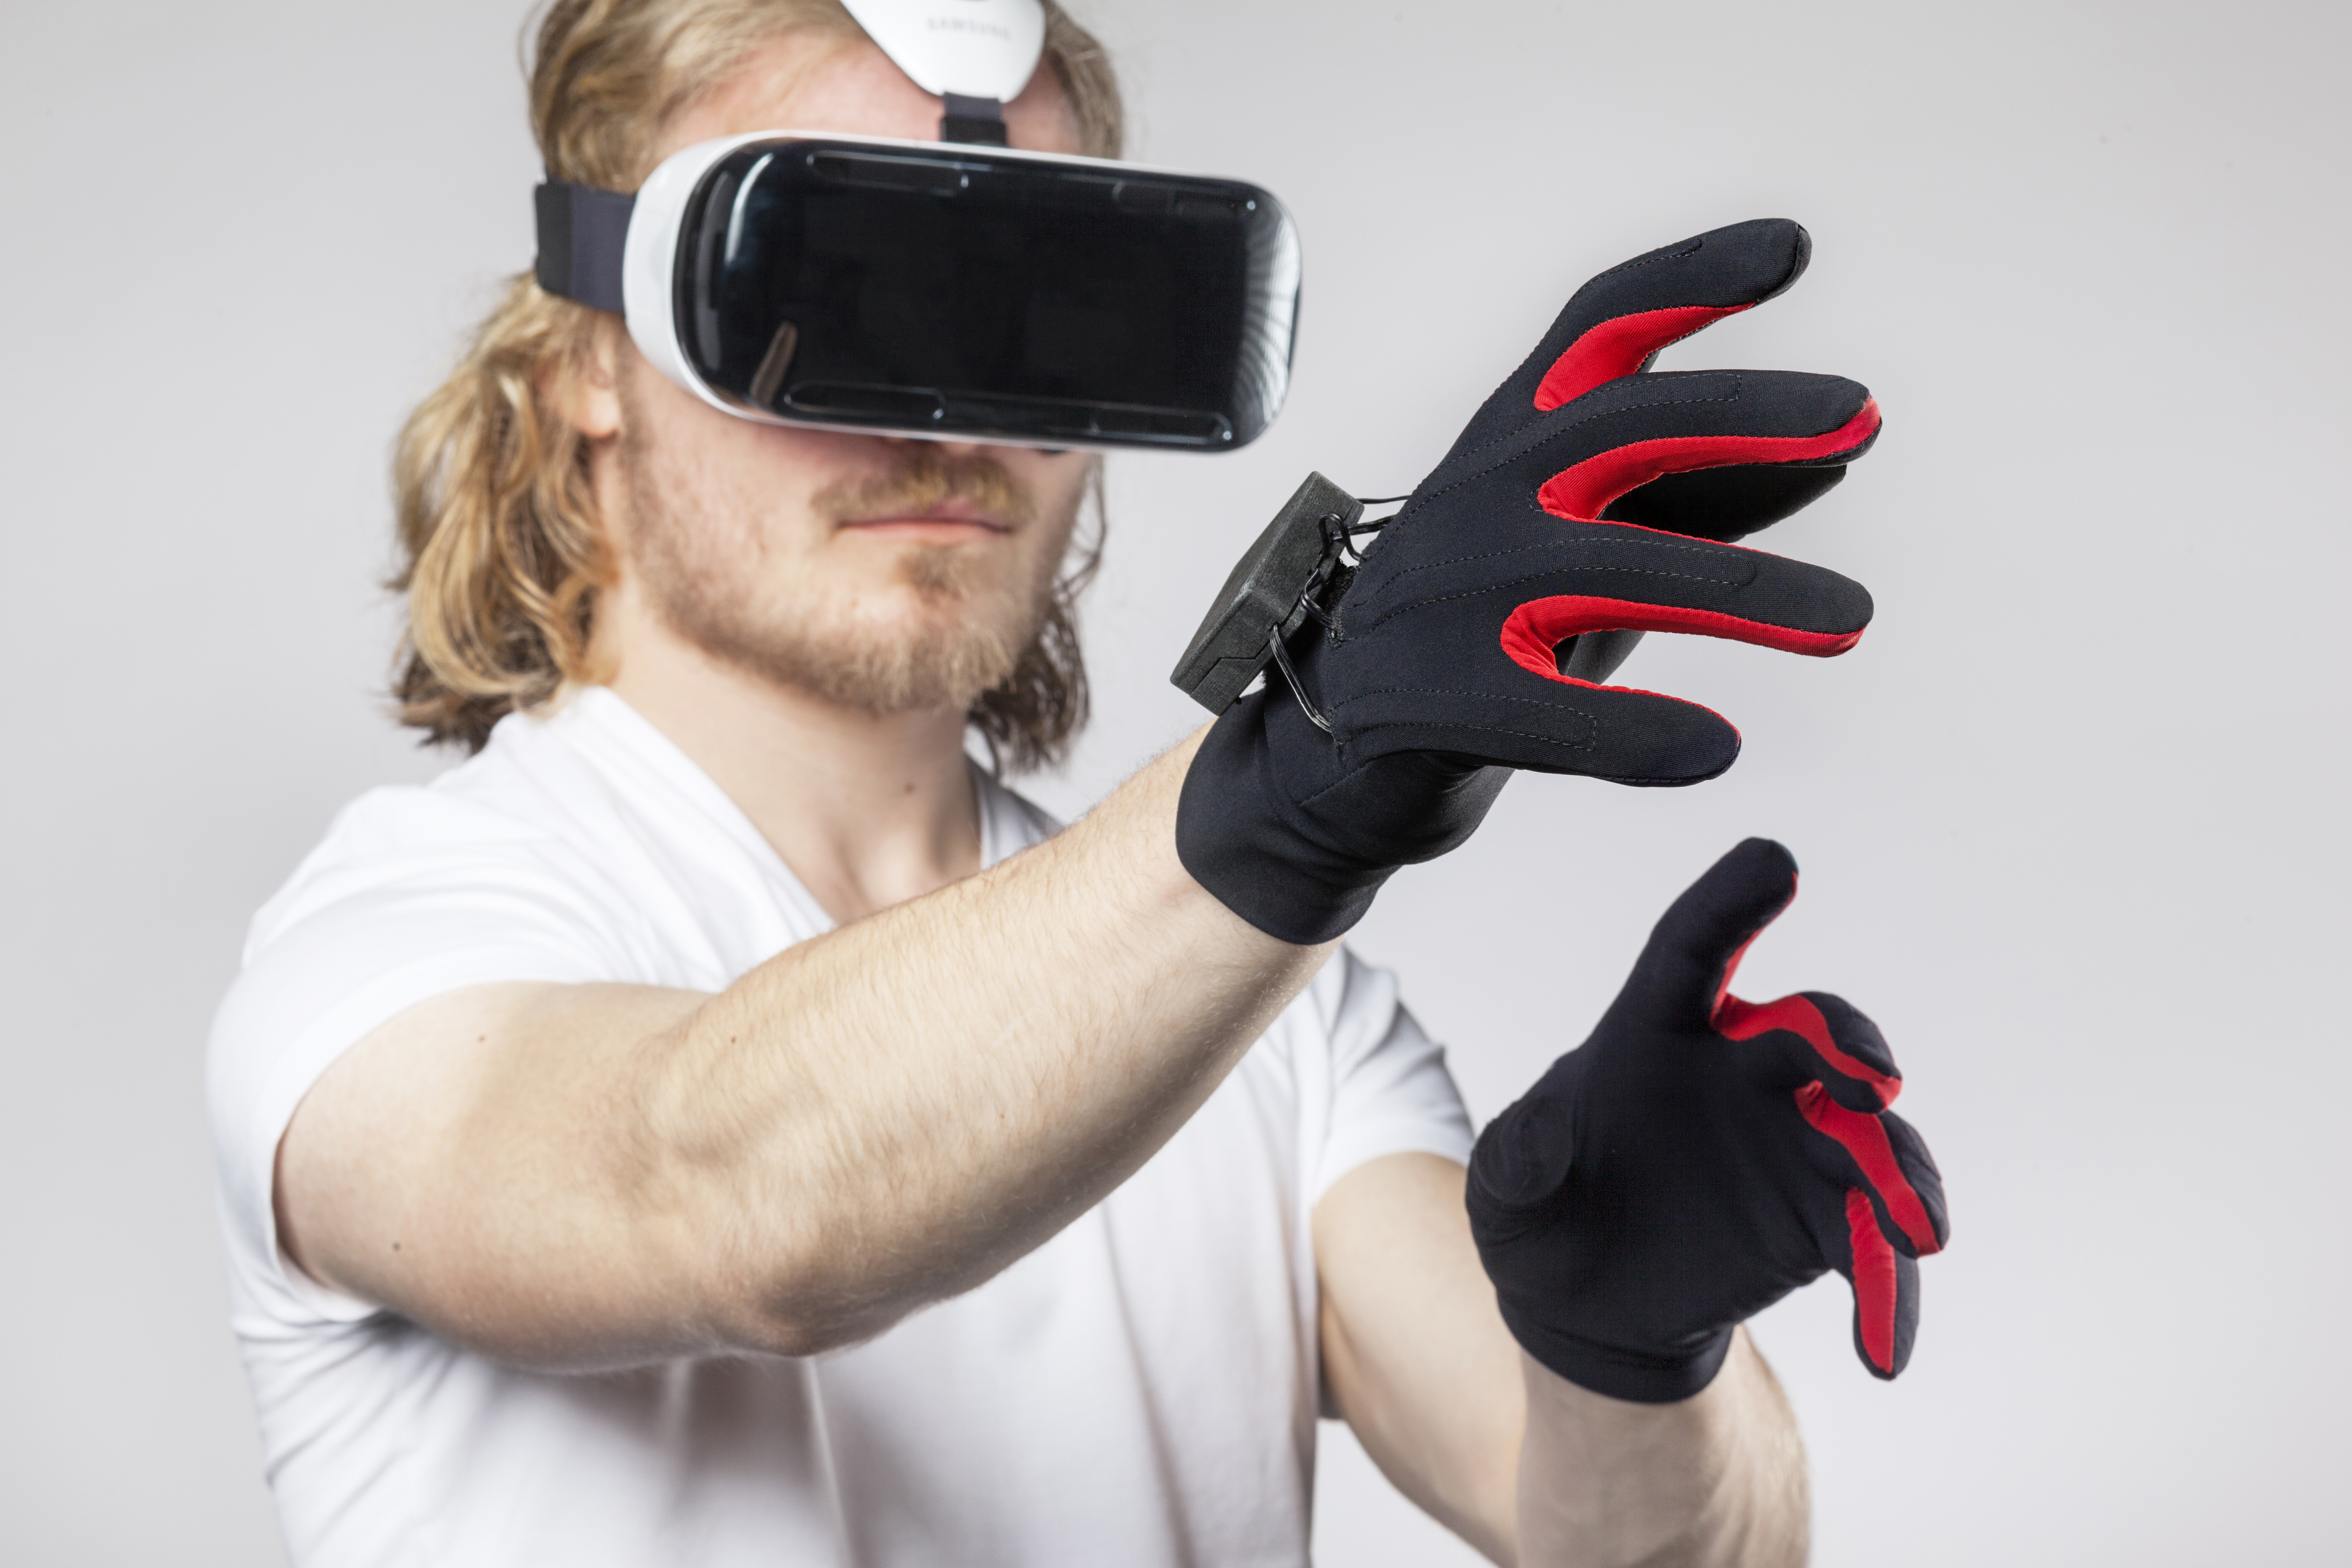 hypocrisy Machu Picchu Thriller Manus Machina Is Building Gaming Gloves For VR | TechCrunch